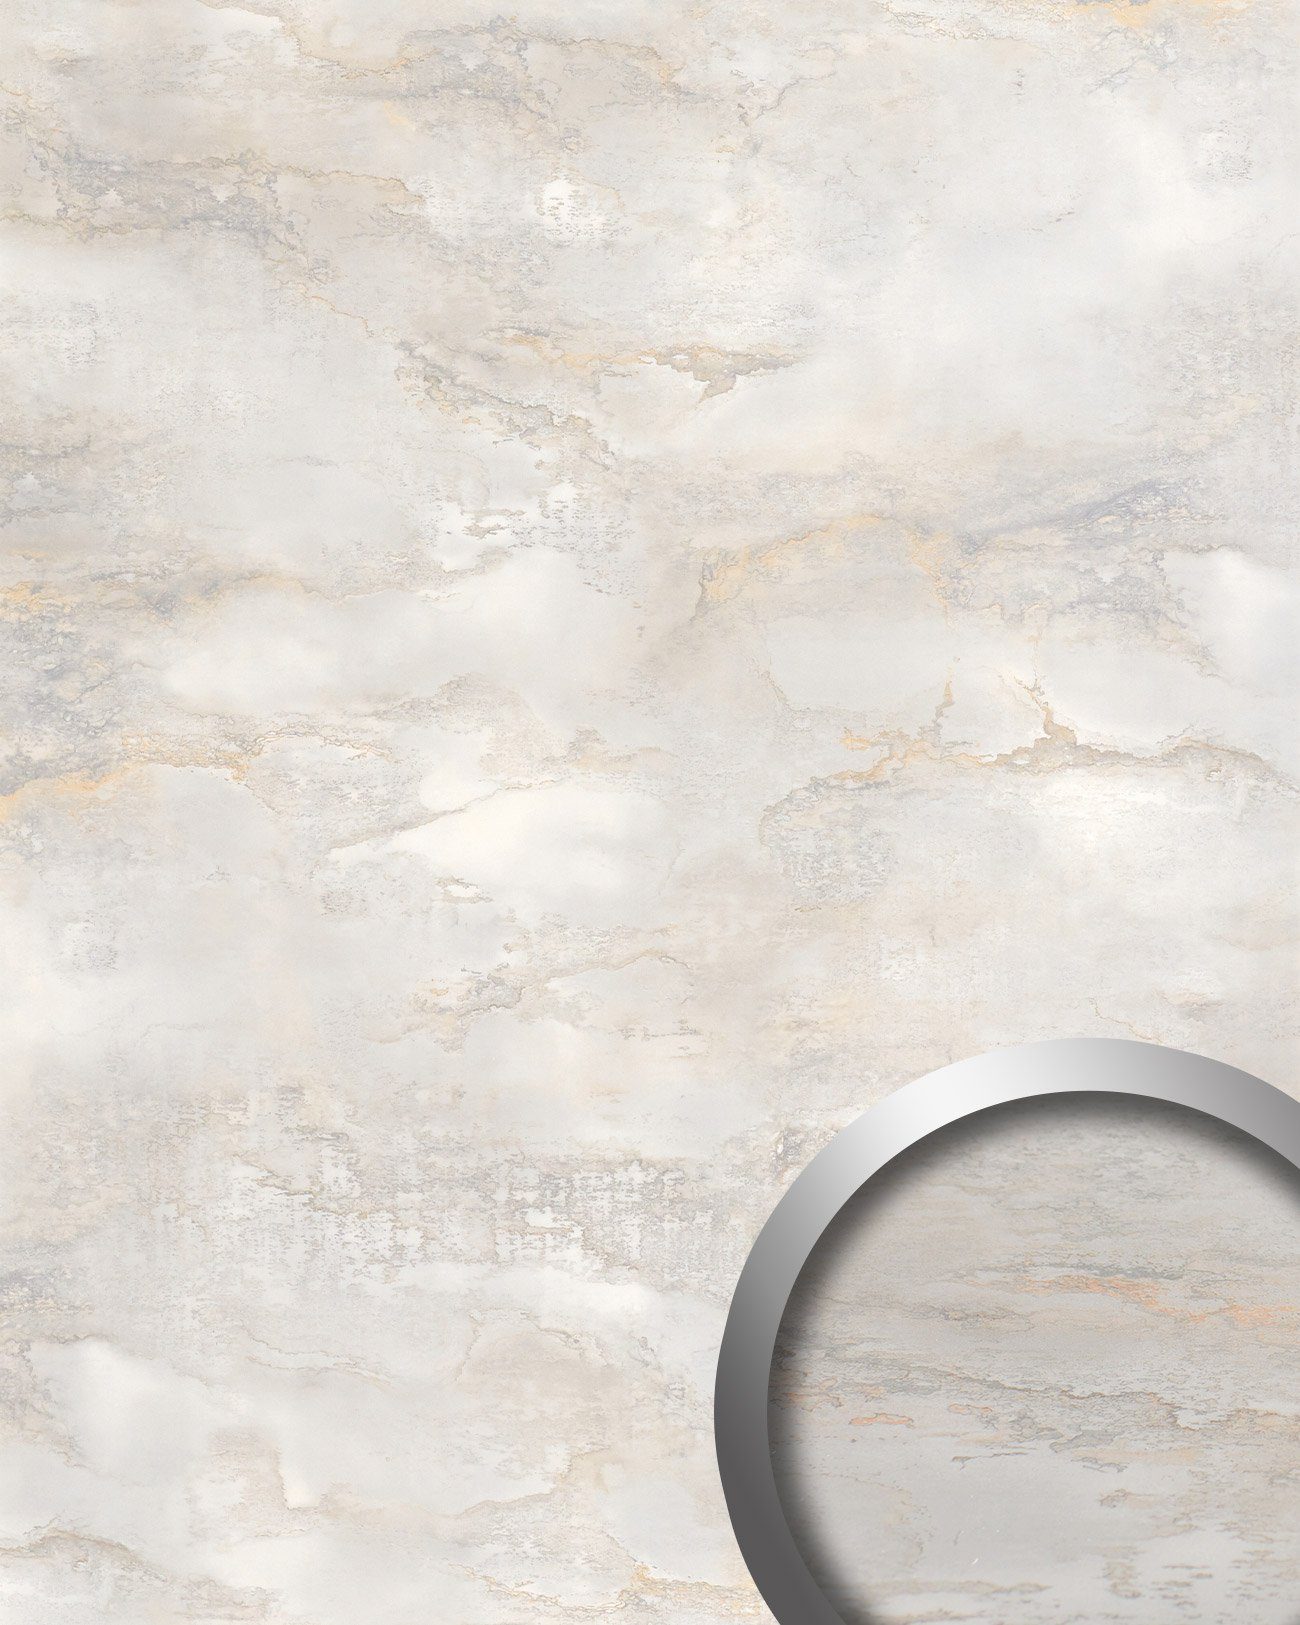 Wallface Dekorpaneele 23100-SA, BxL: 100x260 cm, 2.6 qm, (Dekorpaneel, 1-tlg., Wandverkleidung in Marmor-Optik) selbstklebend, weiß, beige, creme-weiß, glatt